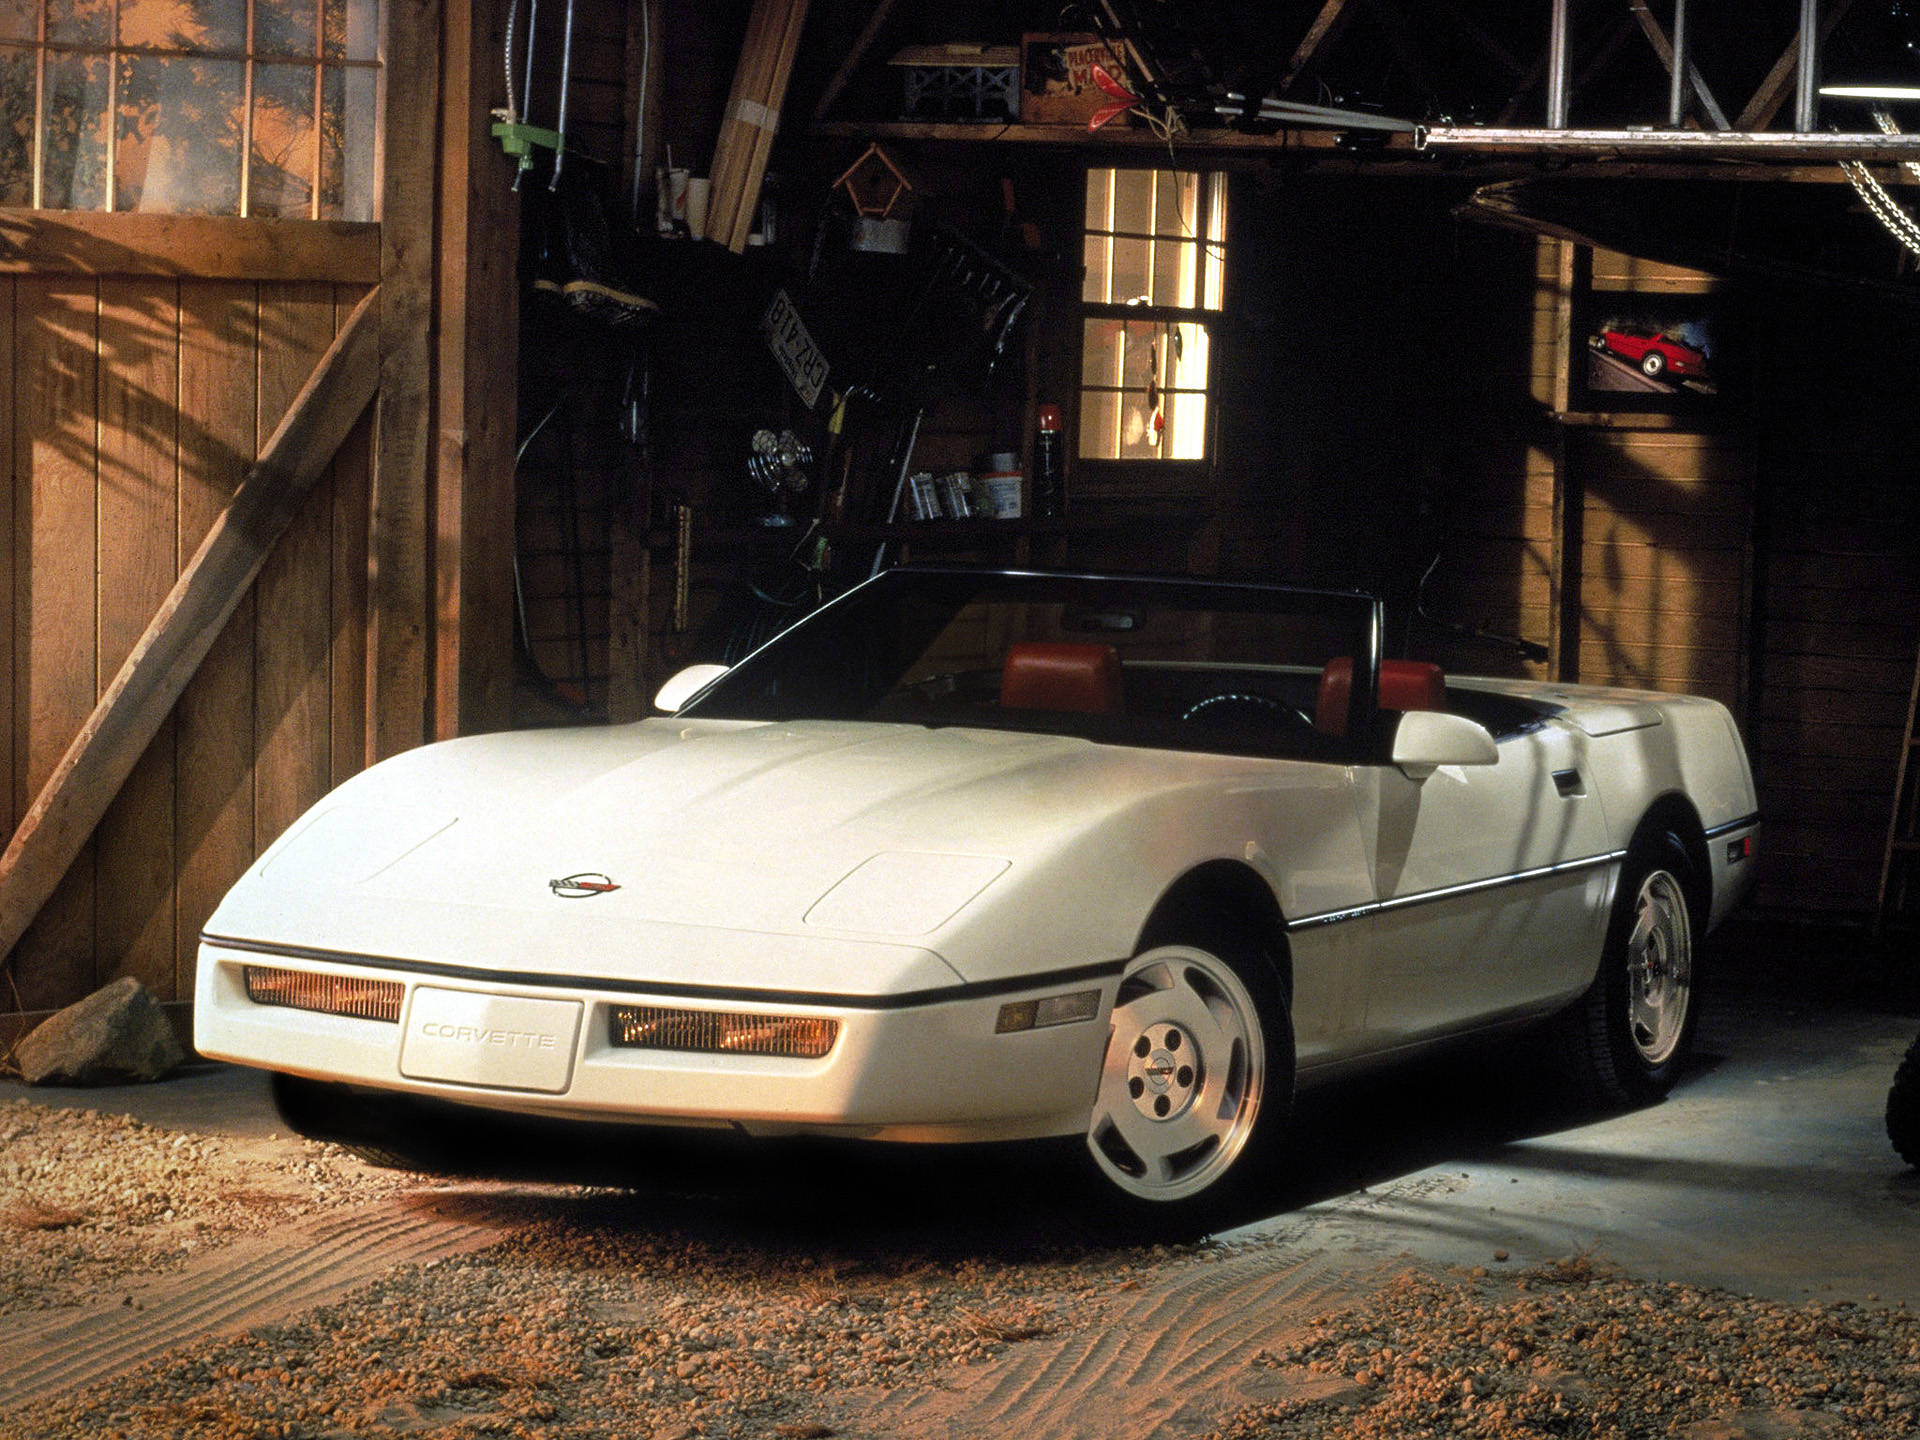 C4 Corvette In A Garage Background